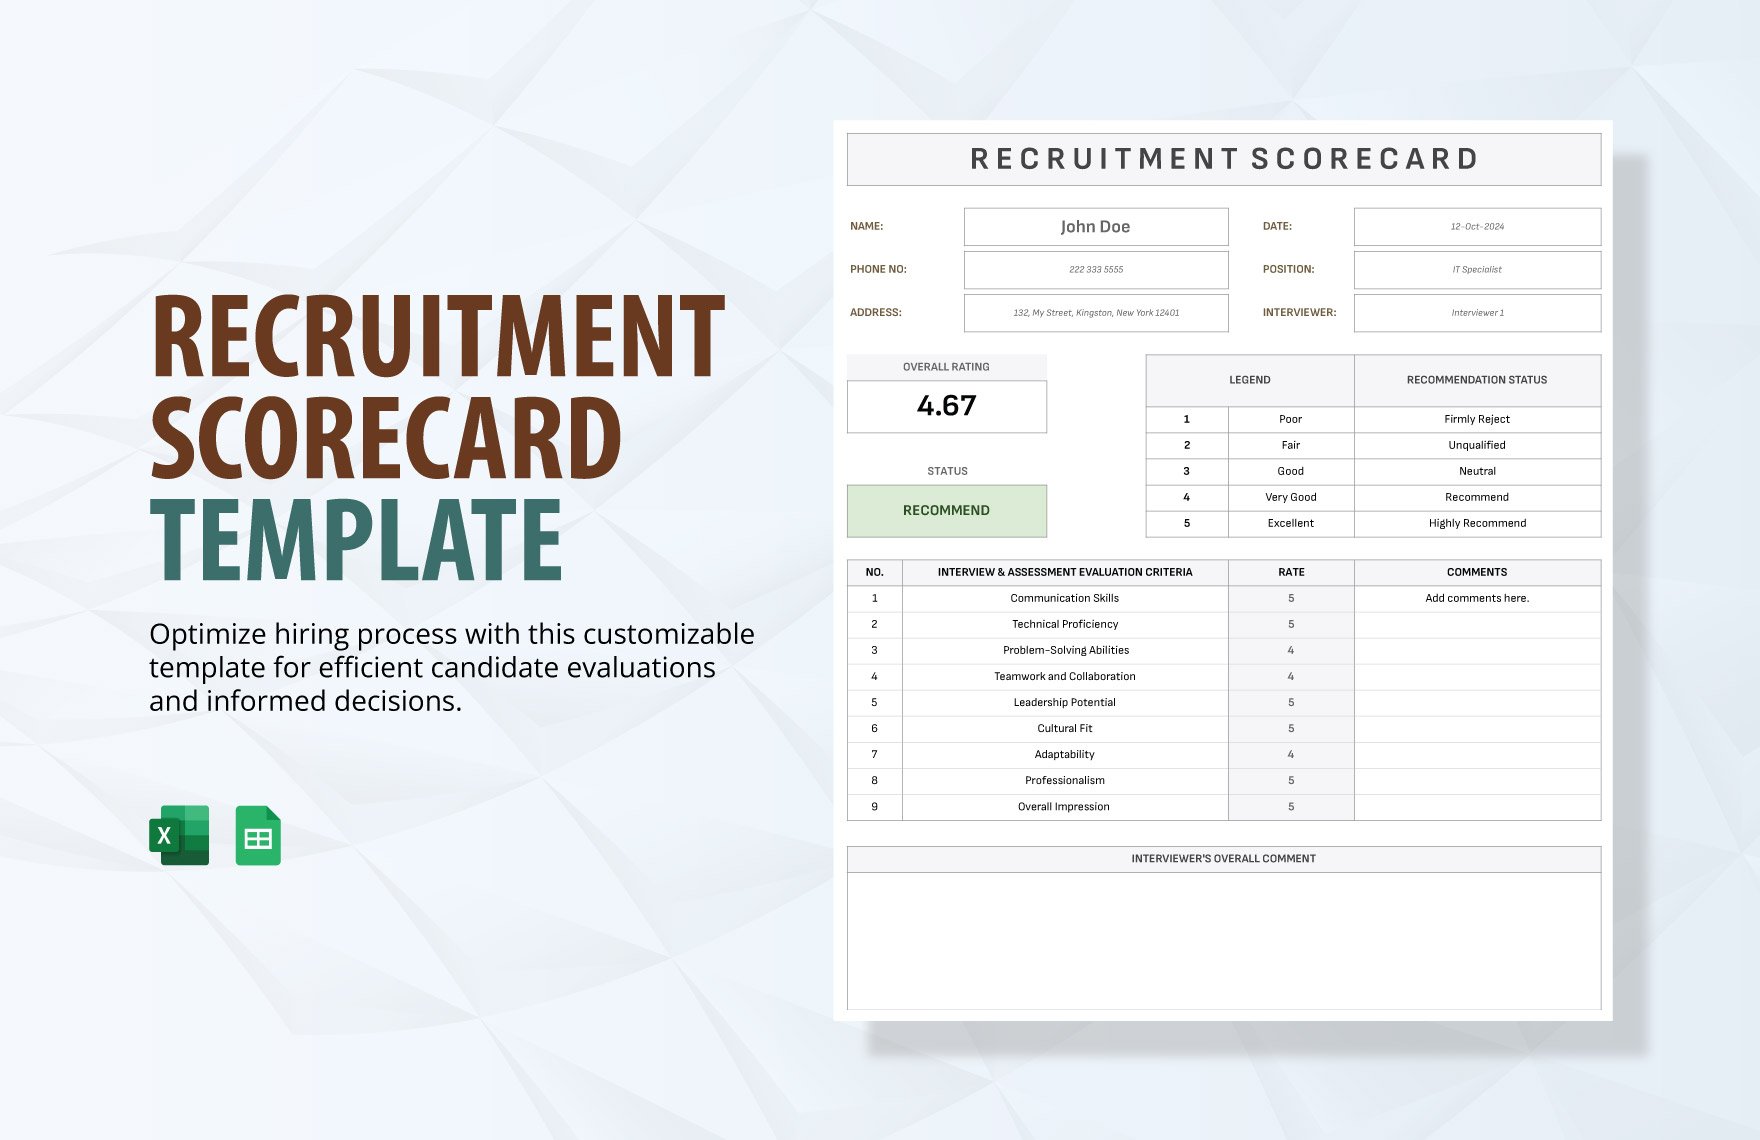 Recruitment Scorecard Template in Excel, Google Sheets